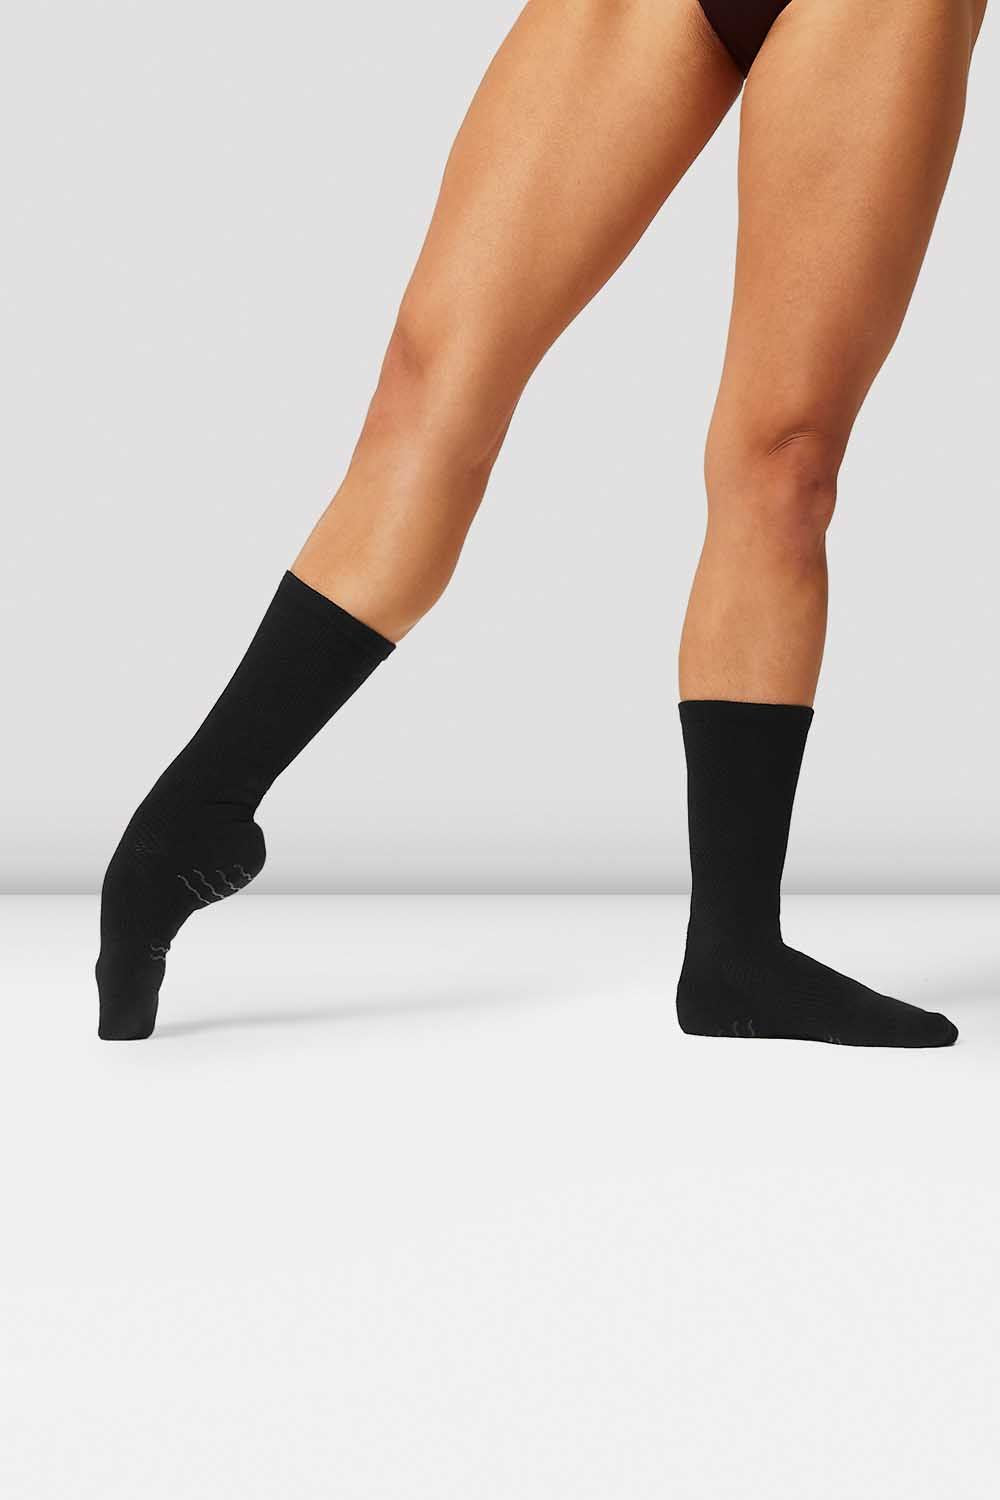 Kids Ankle Dance Socks NSOCKCBLK Black One-Size 